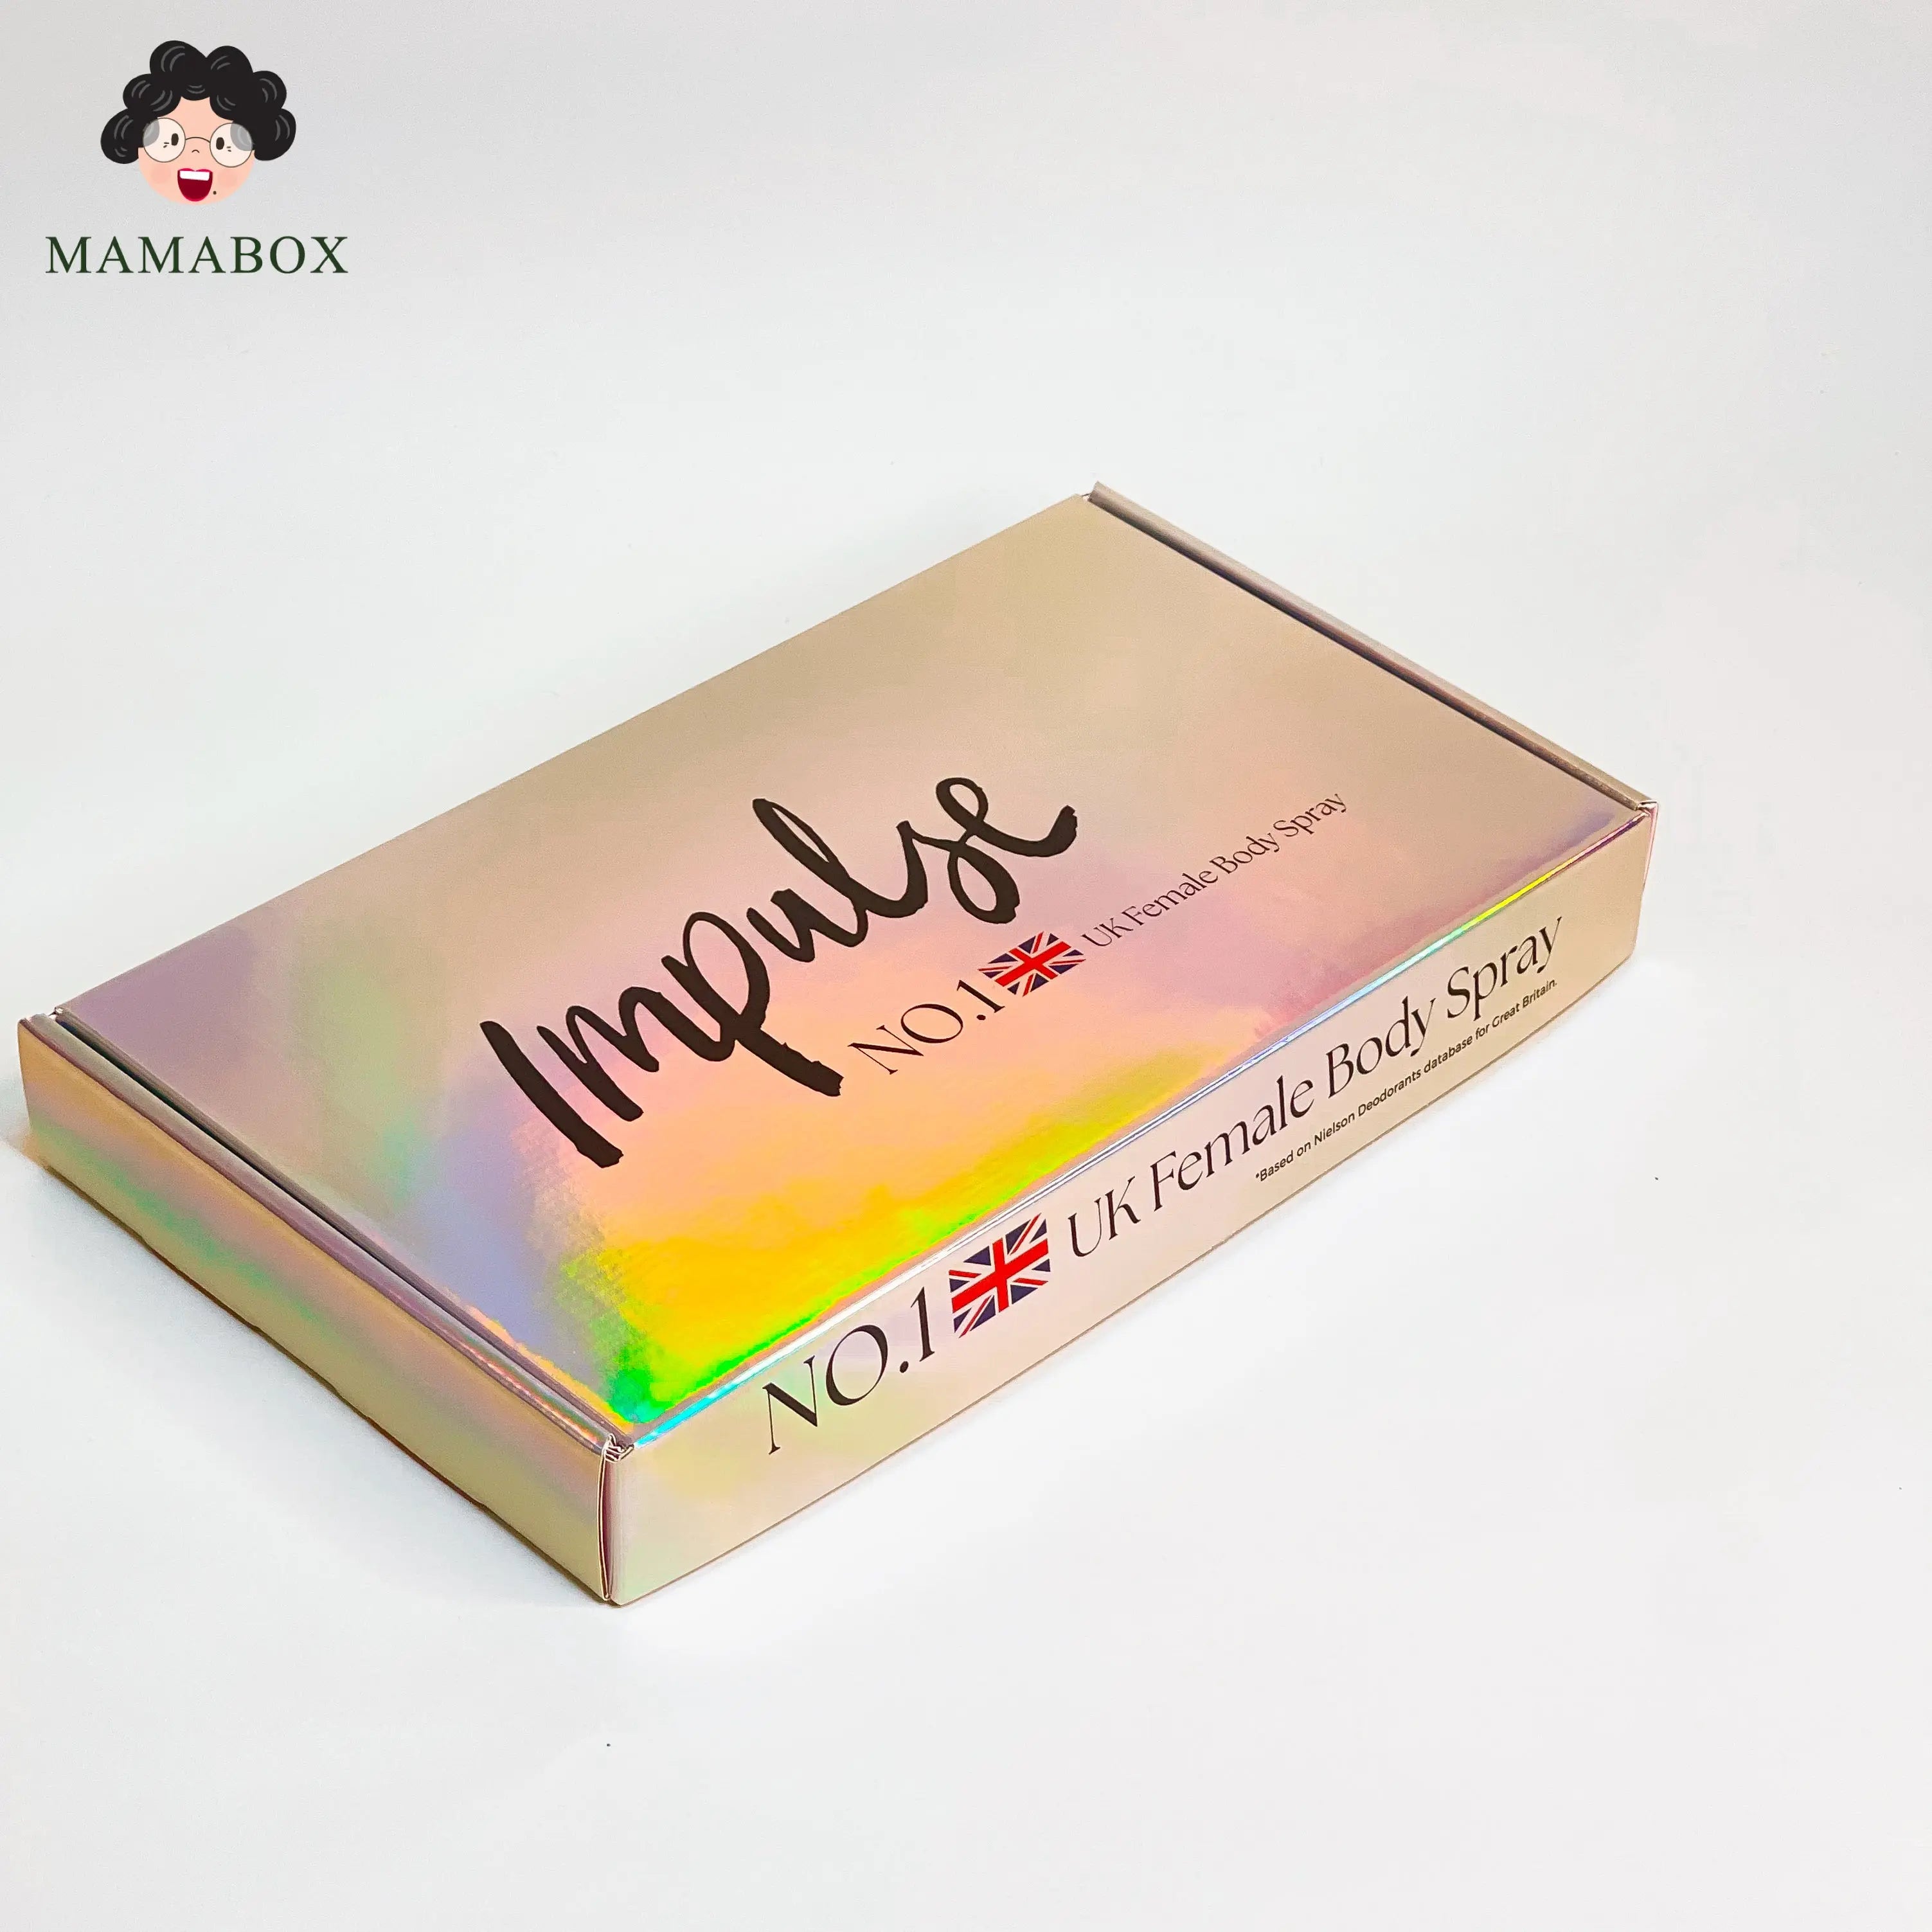 [BUNDLE OF 6]Impulse Body Spray Deodorant New Packaging 75ml - mamabox.sg